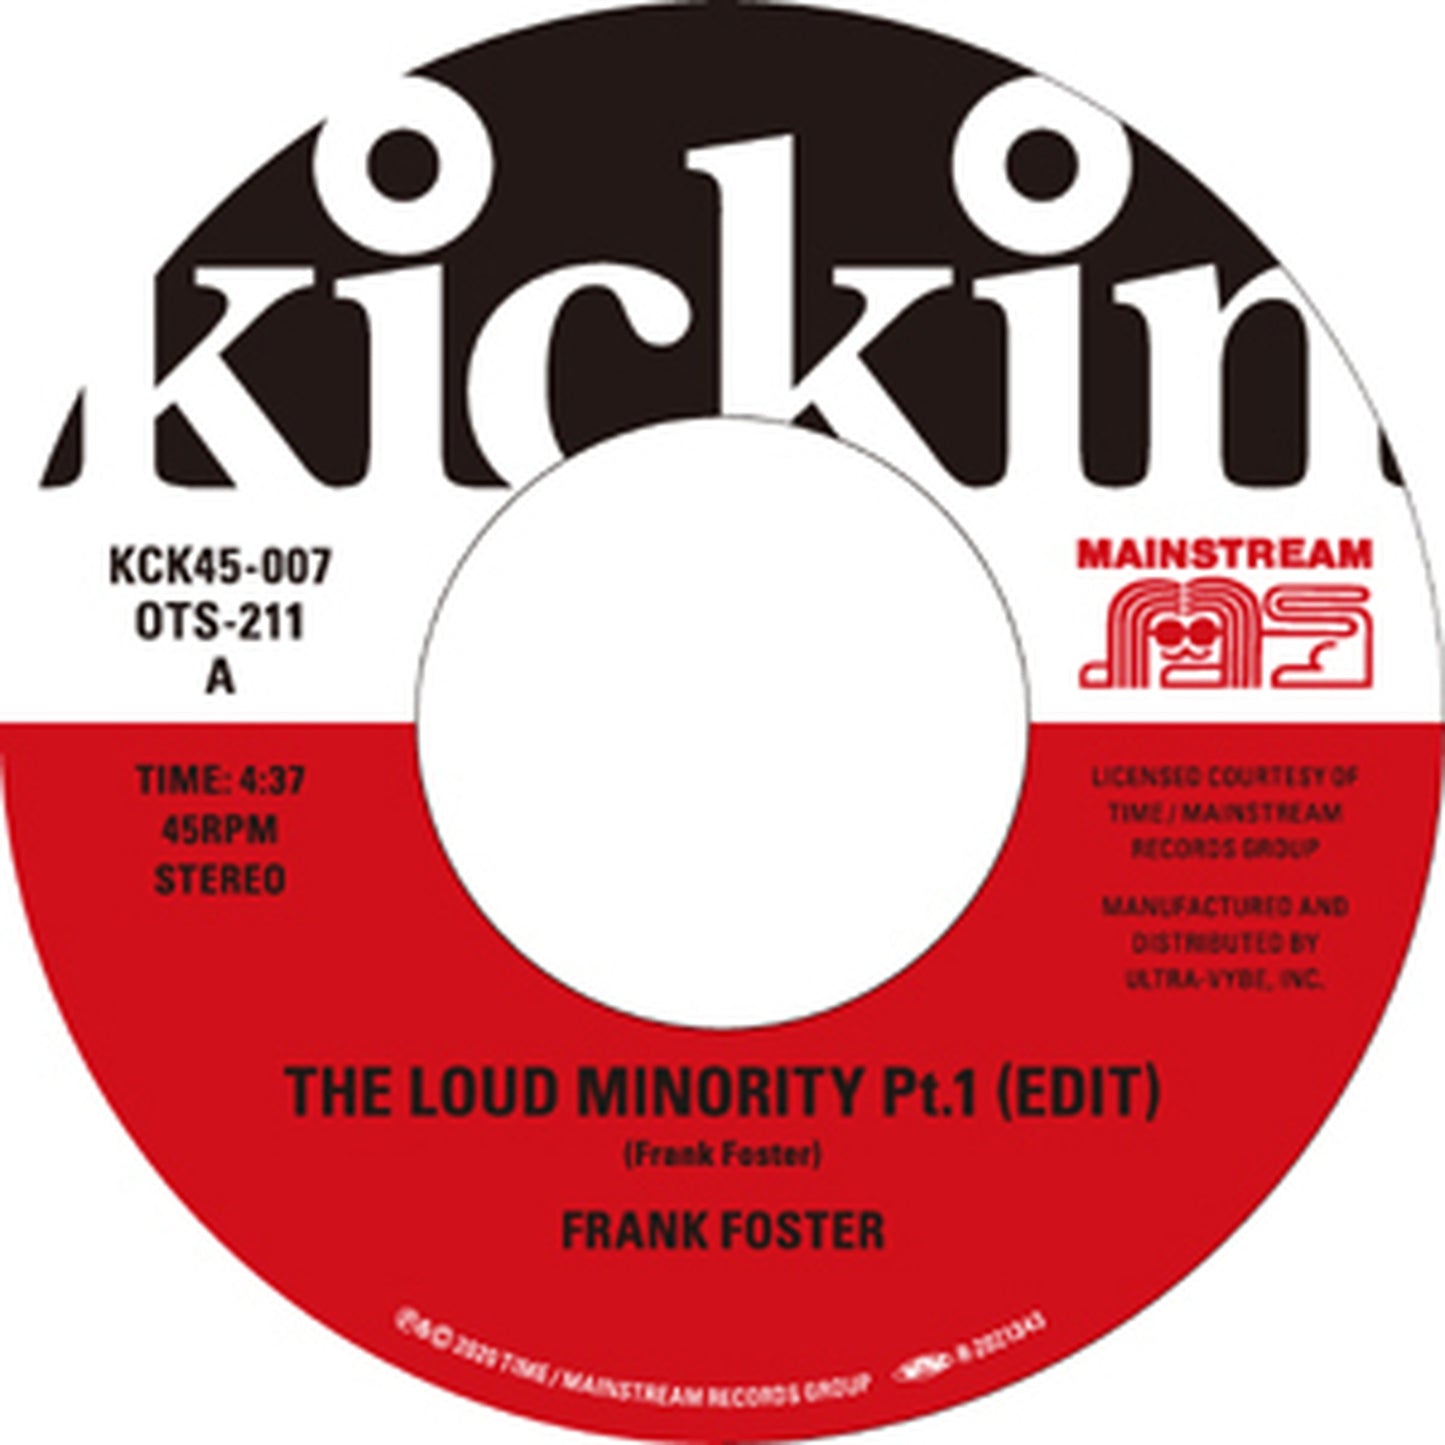 【7"】Kickin Presents Mainstream 45 - The Loud Minority (Edit) pt.1 & 2